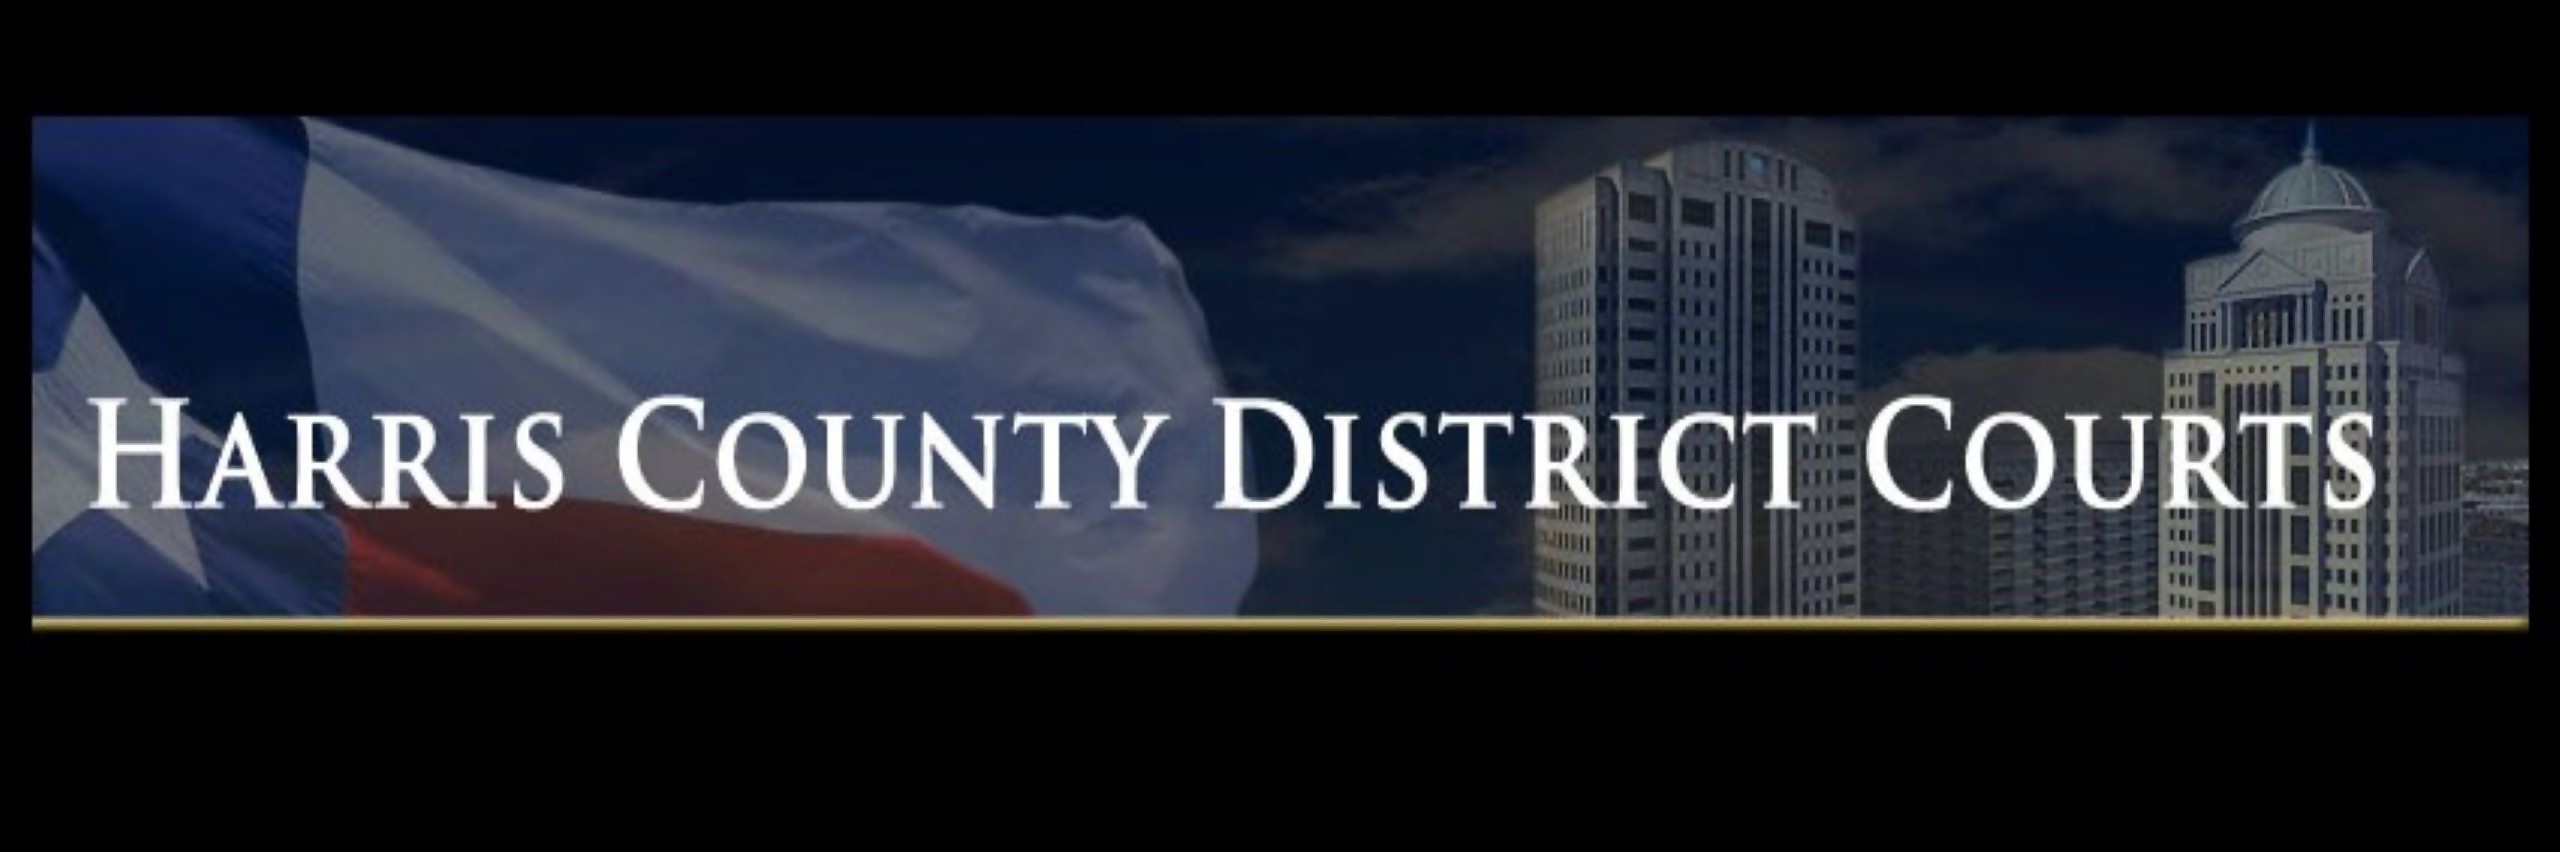 179th District Court - Live Stream